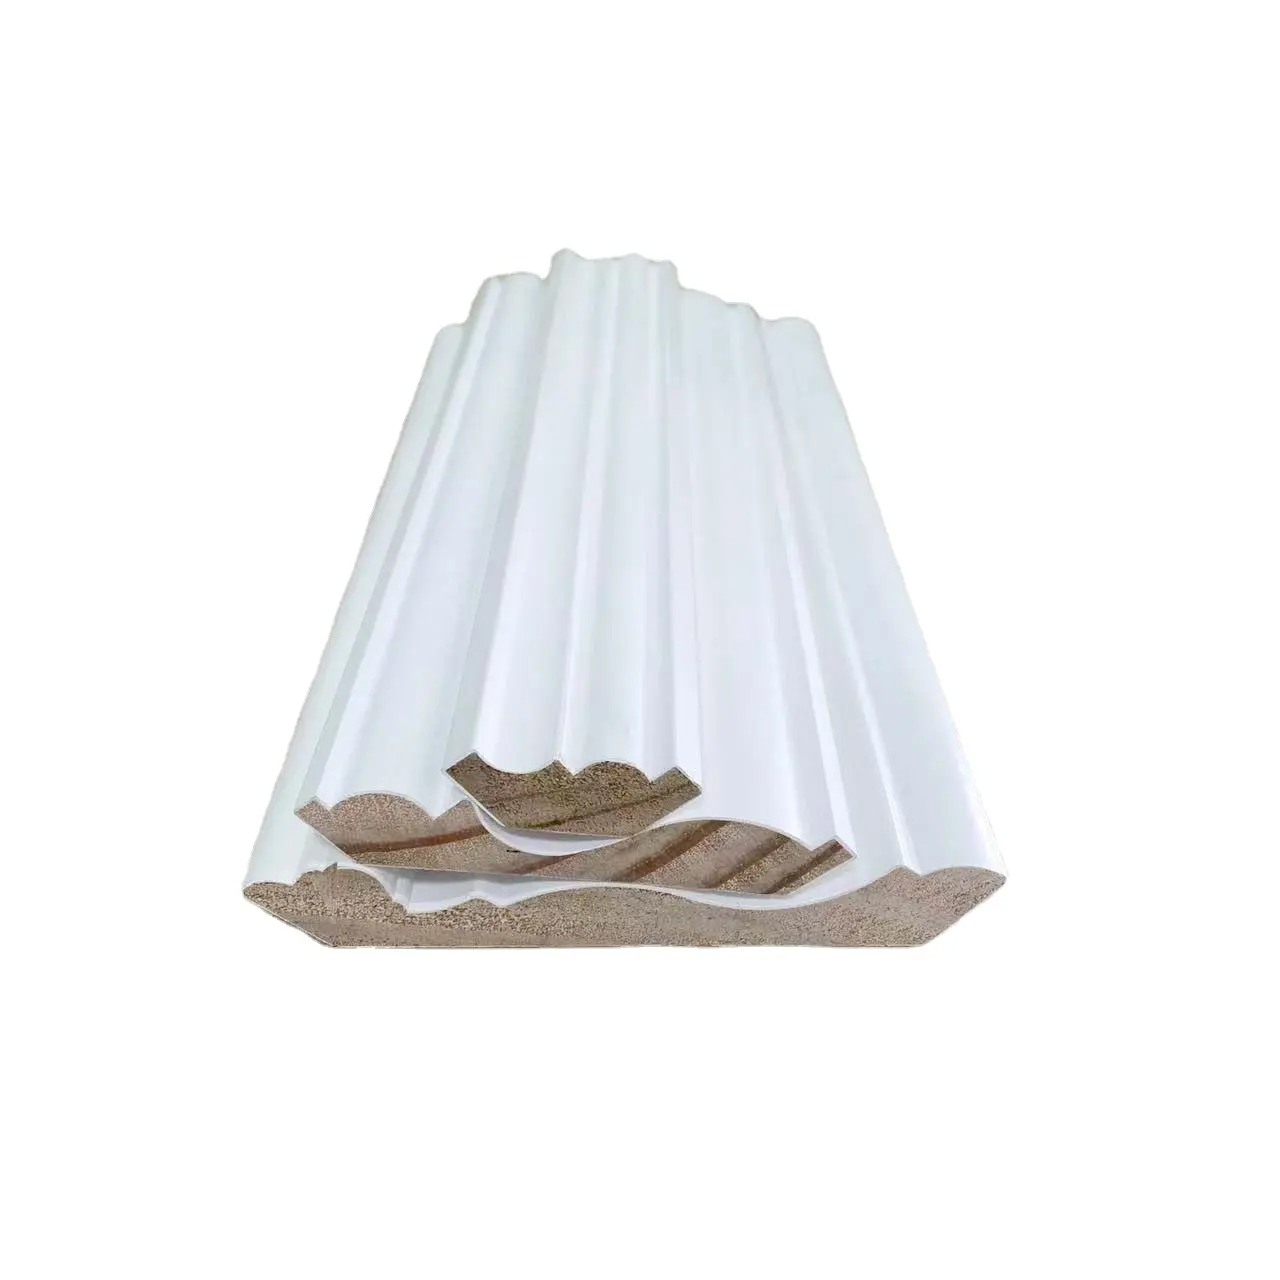 Moldura de cornisa de yeso, moldura de madera para techo, decoración blanca, moldura de corona